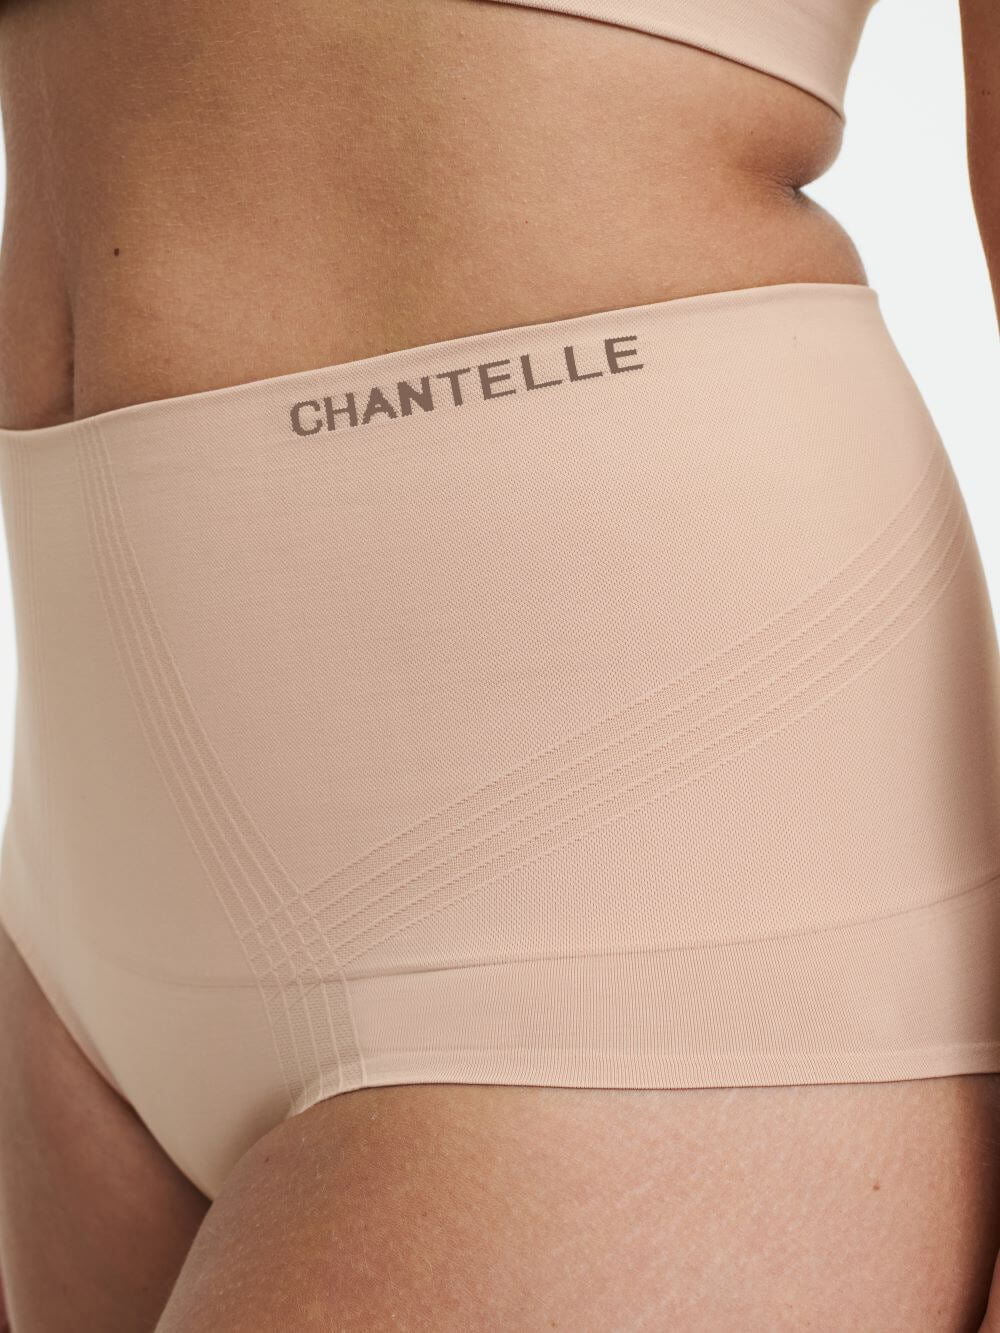 Chantelle - Smooth Comfort Hud.